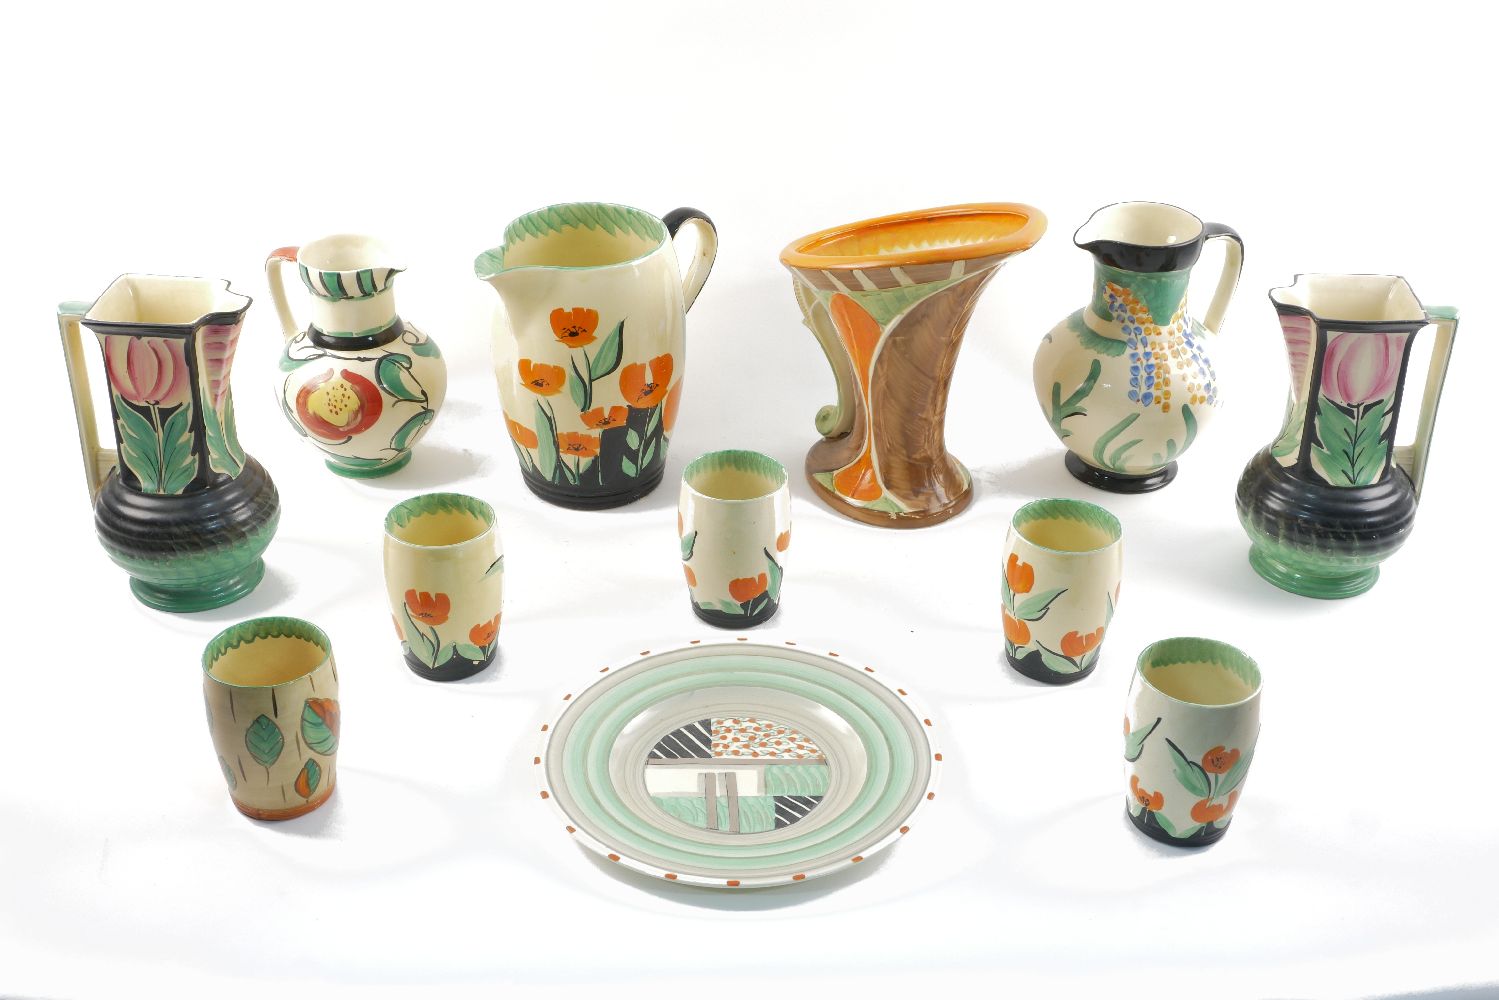 A Myott lemonade set, 20th century, decorated with orange tulips, the jug 21.5cm high, the 5 cups